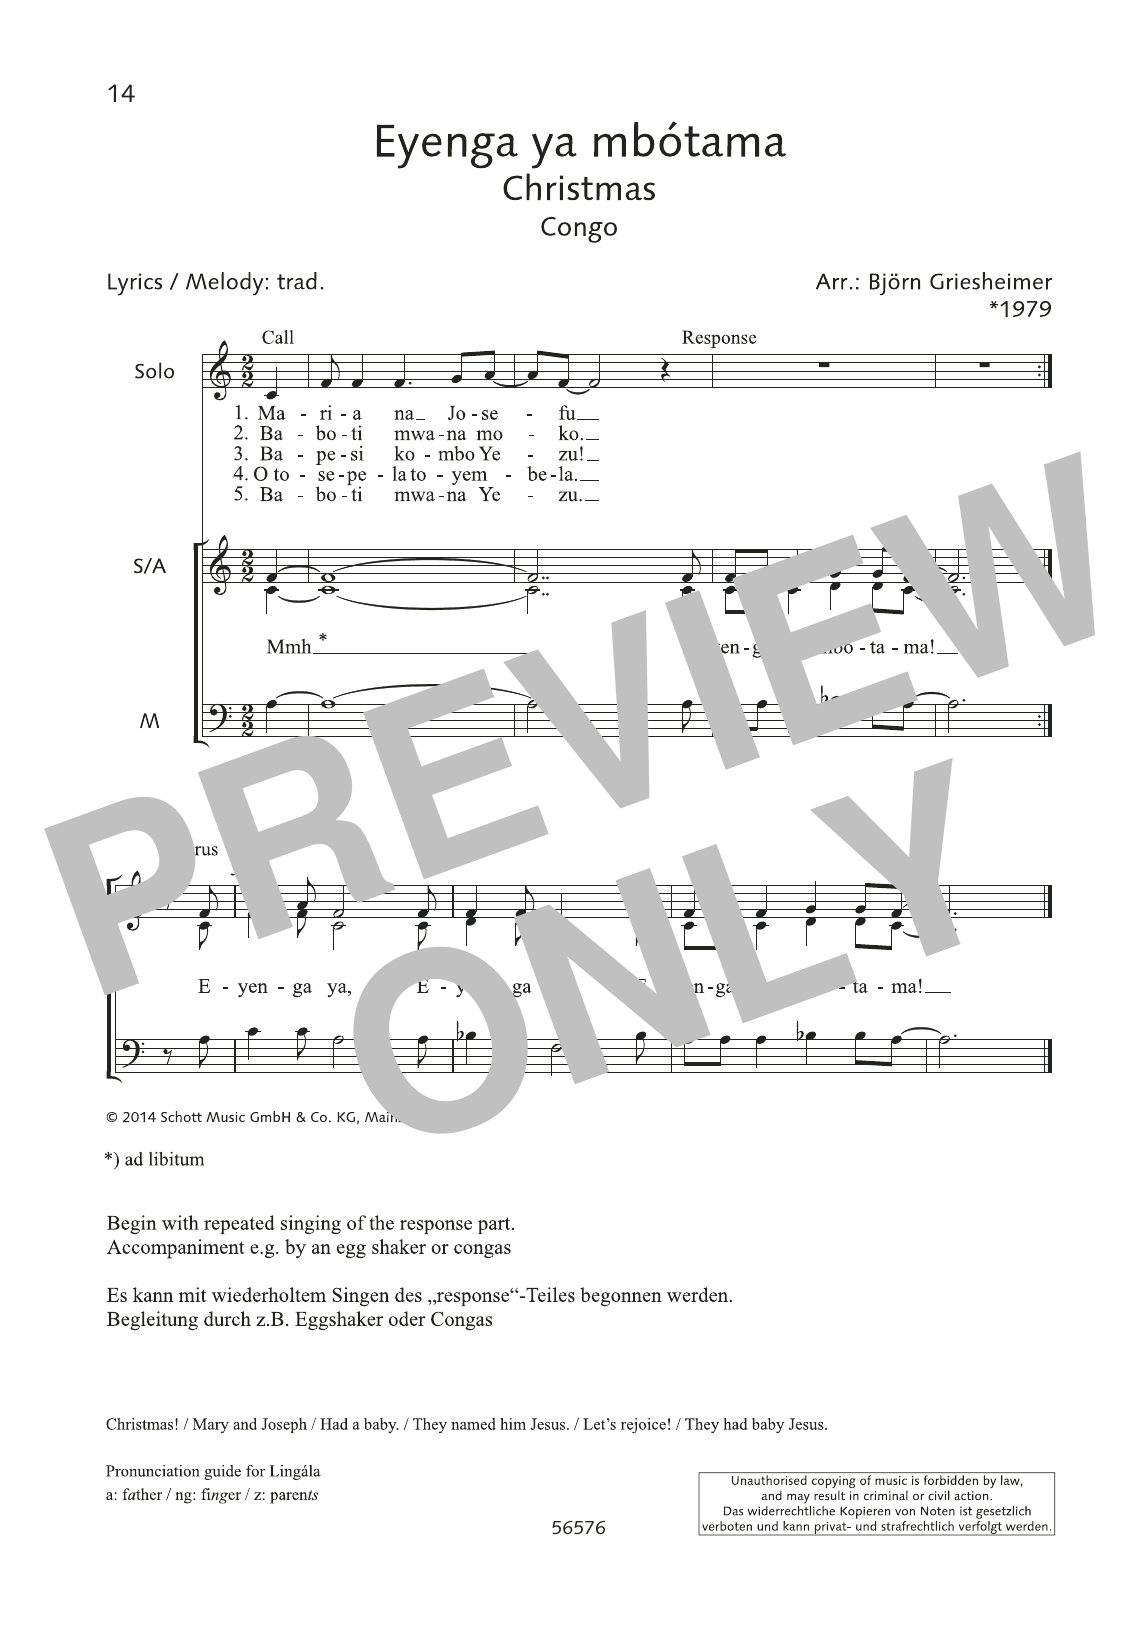 Björn Griesheimer Eyenga ya mbotama Sheet Music Notes & Chords for Choral - Download or Print PDF